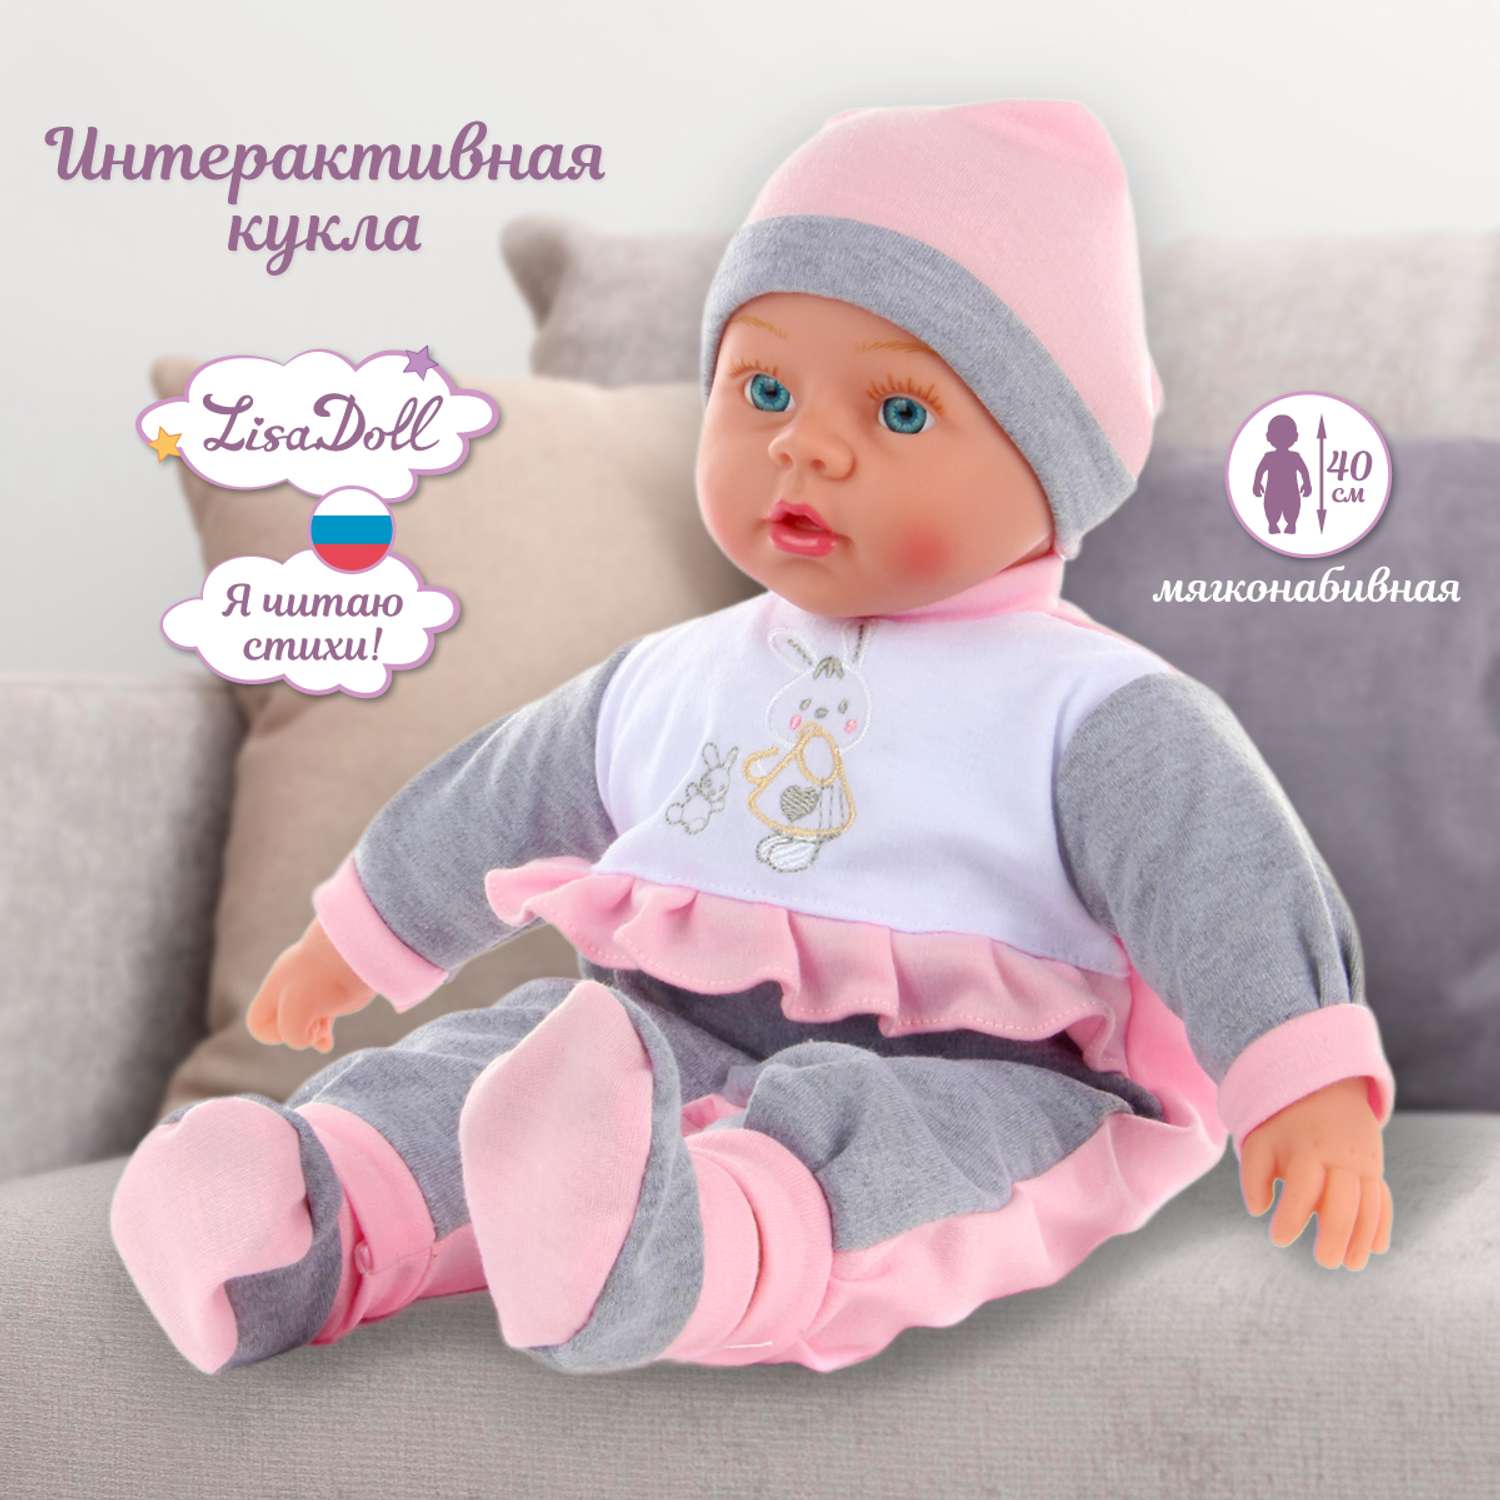 Кукла пупс Lisa Doll 40 см русская озвучка 97044 - фото 1